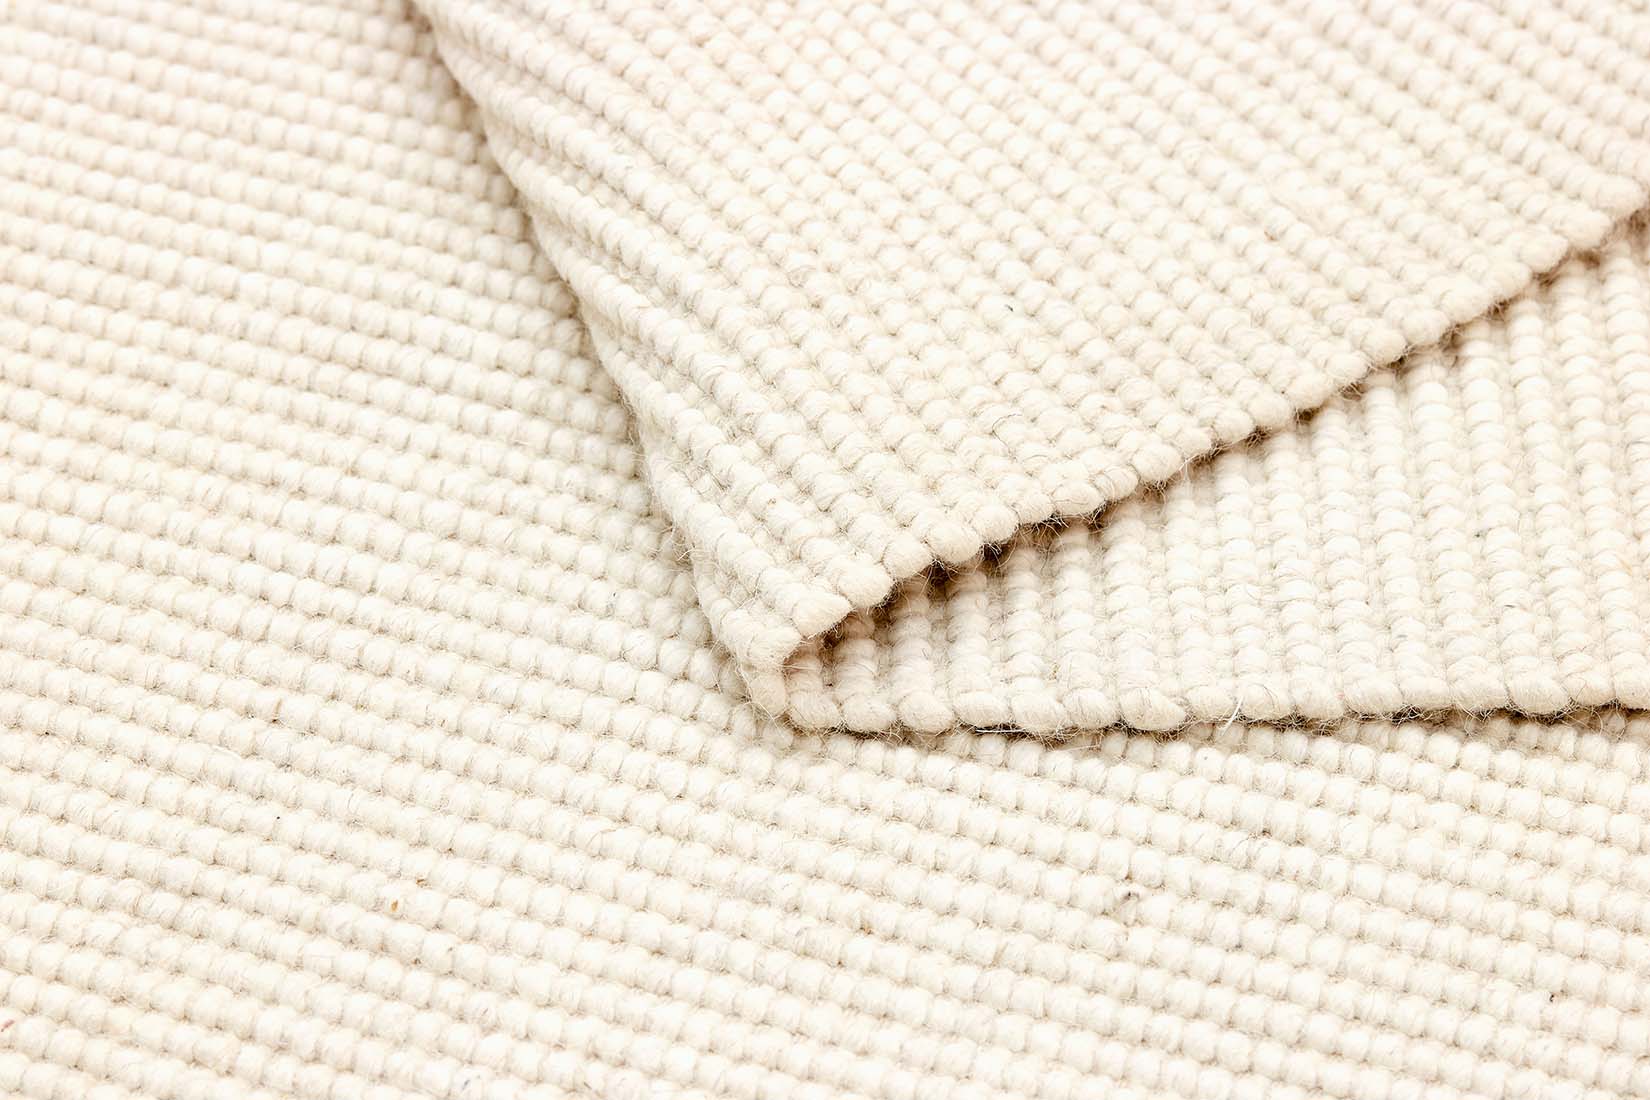 Simple white textured flatweave rug
